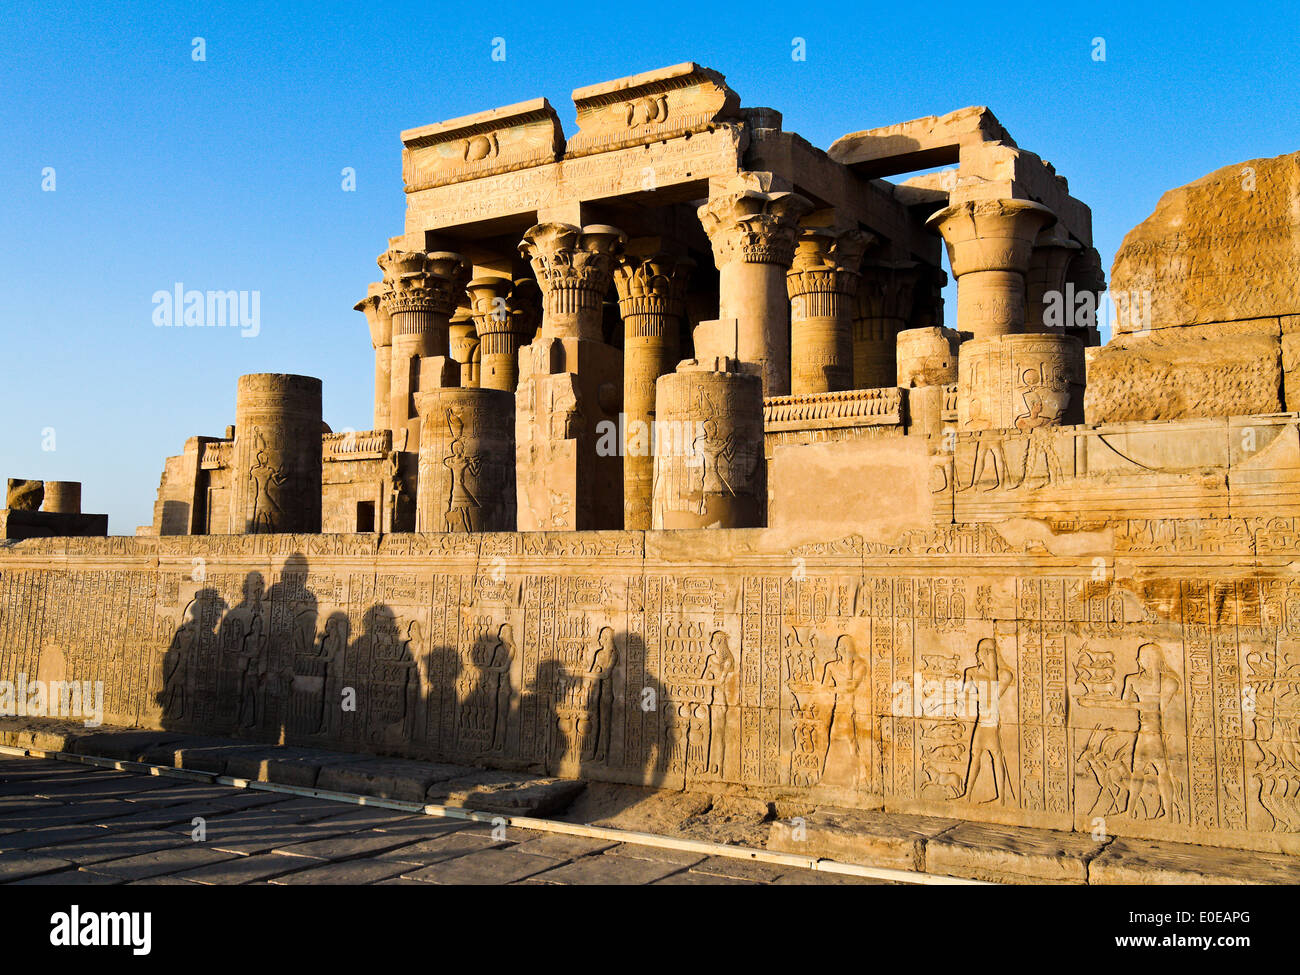 The temple of Kom Ombo in egypt, Africa., Der malerische Doppeltempel von Kom Ombo in Ägypten, Afrika. Stock Photo